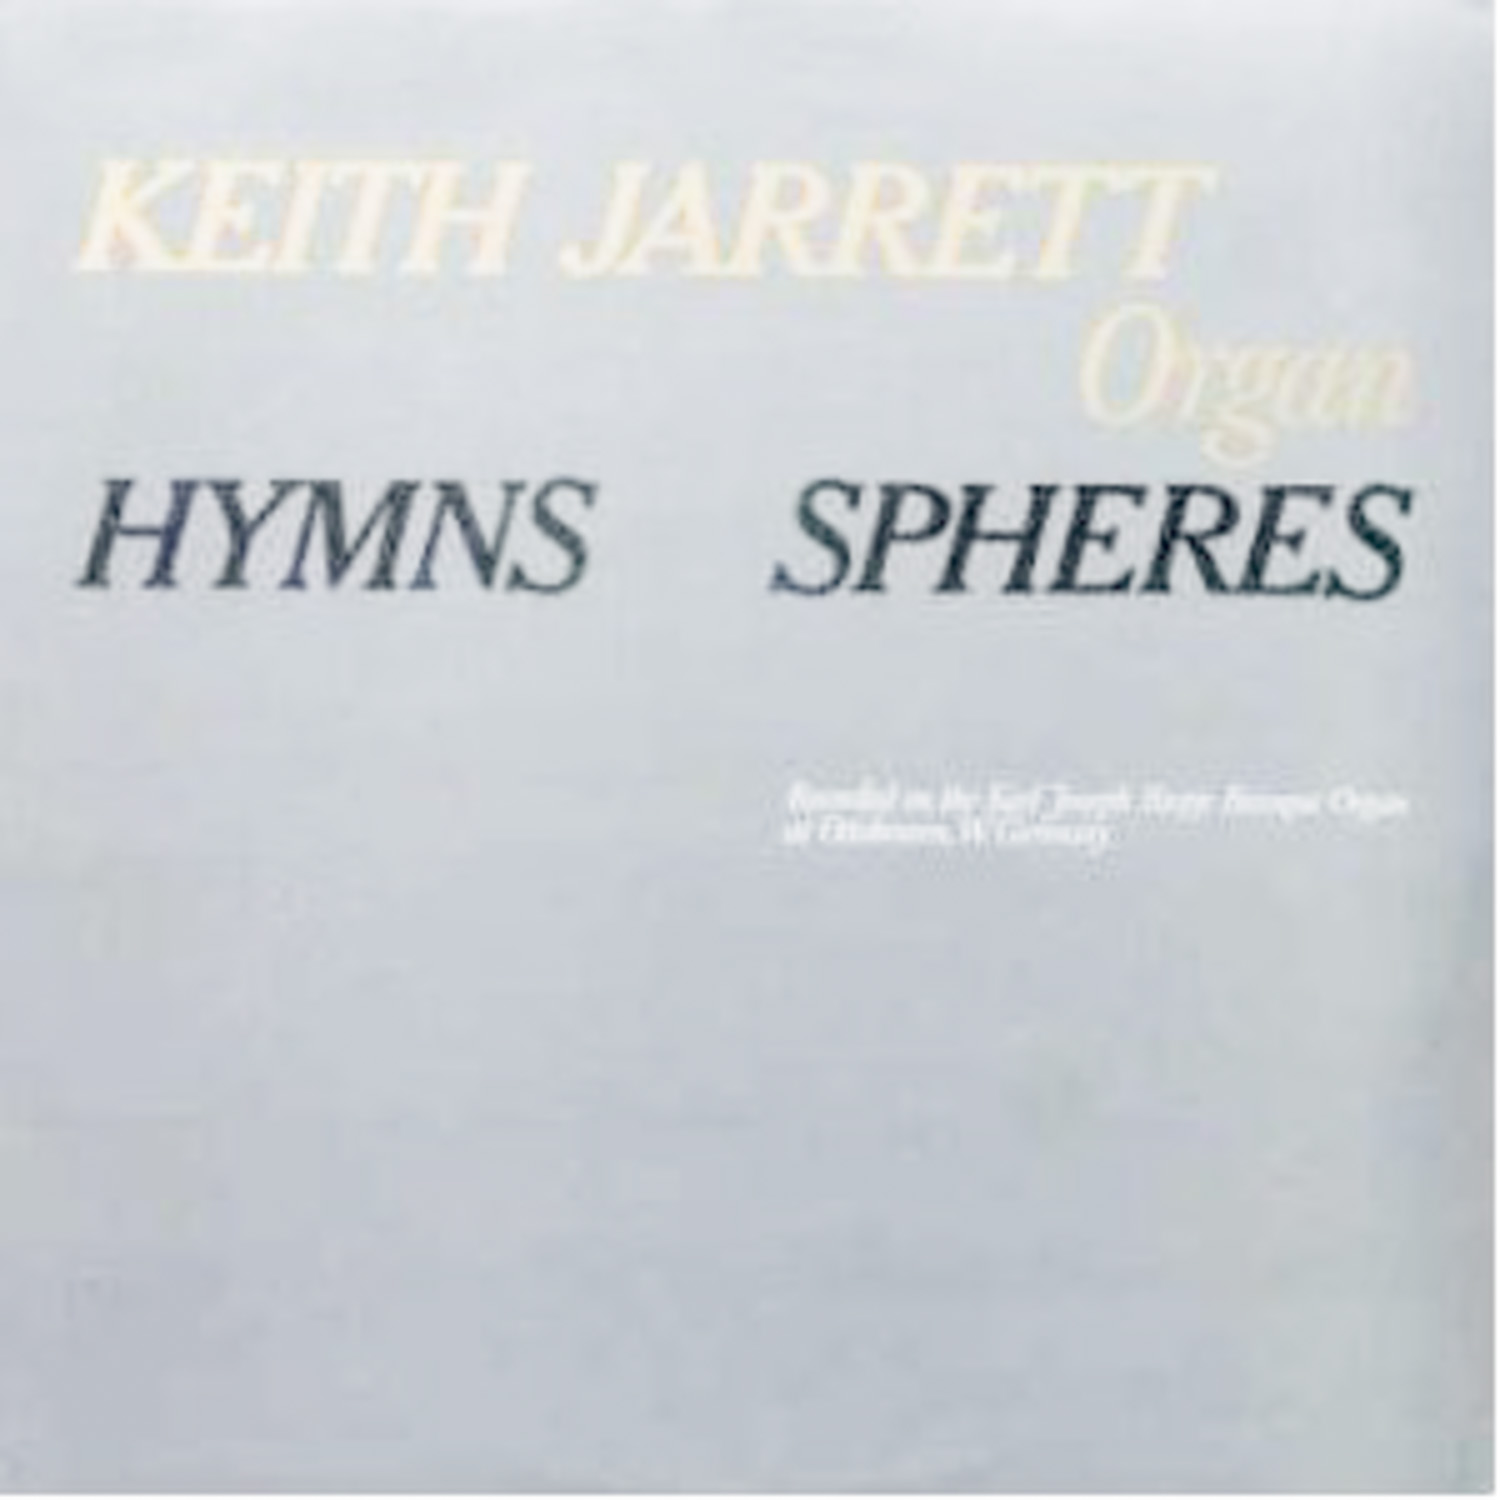 Keith Jarrett  Hymnes Spheres (ECM 1086/87)  *LP 12'' (Vinyl)*. 